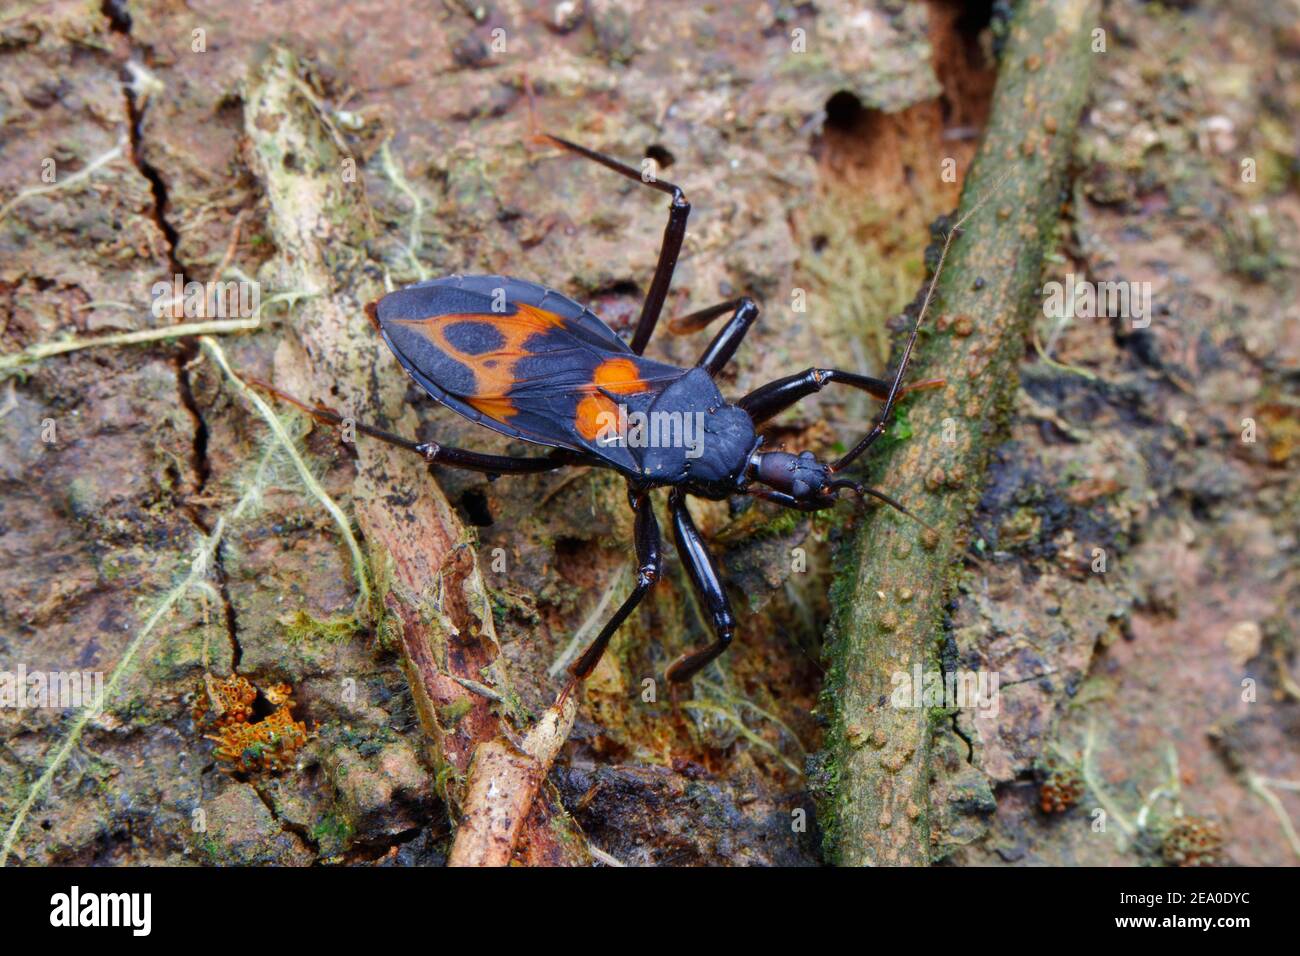 an Assassin Bug, Reduviidae, crawling on a tree trunk Stock Photo